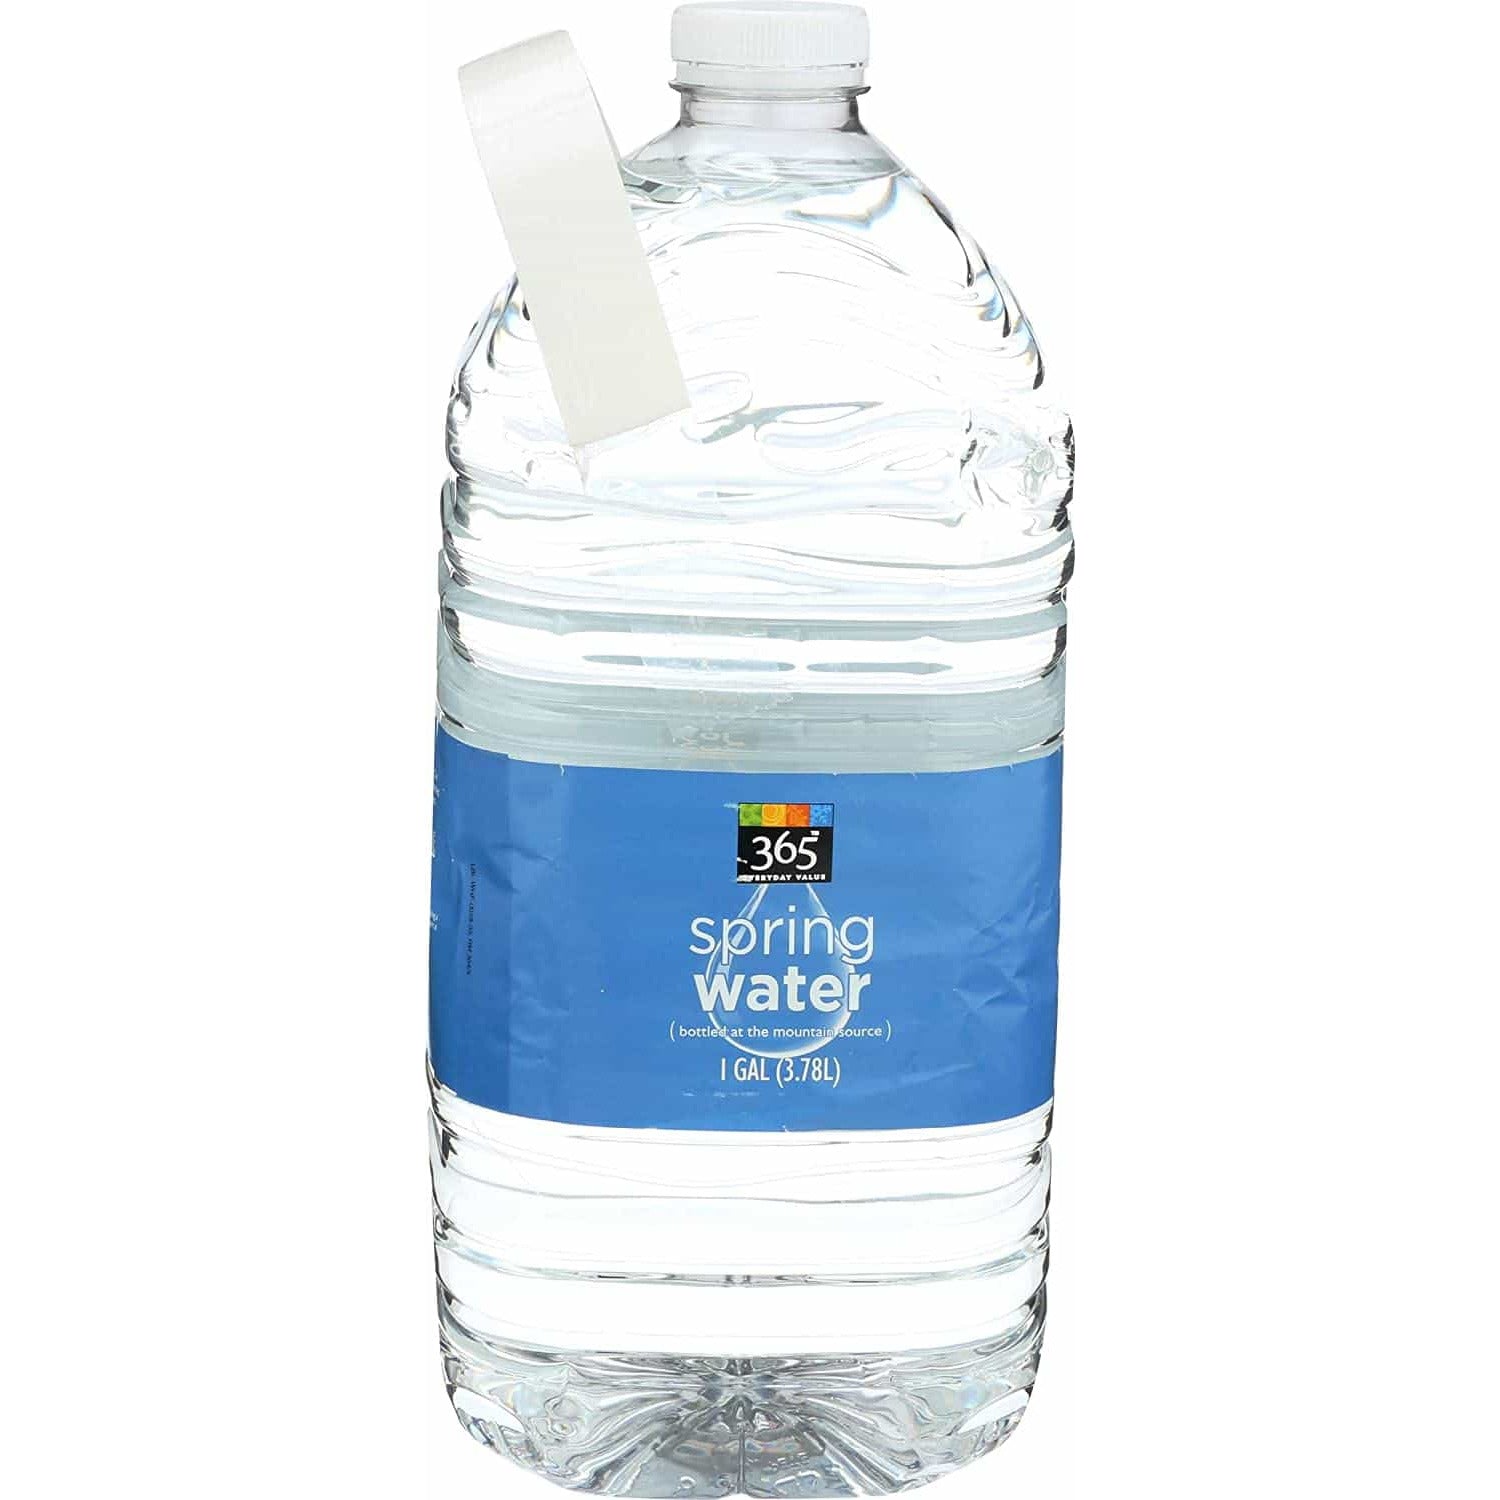 Spring Water, 1 gallon